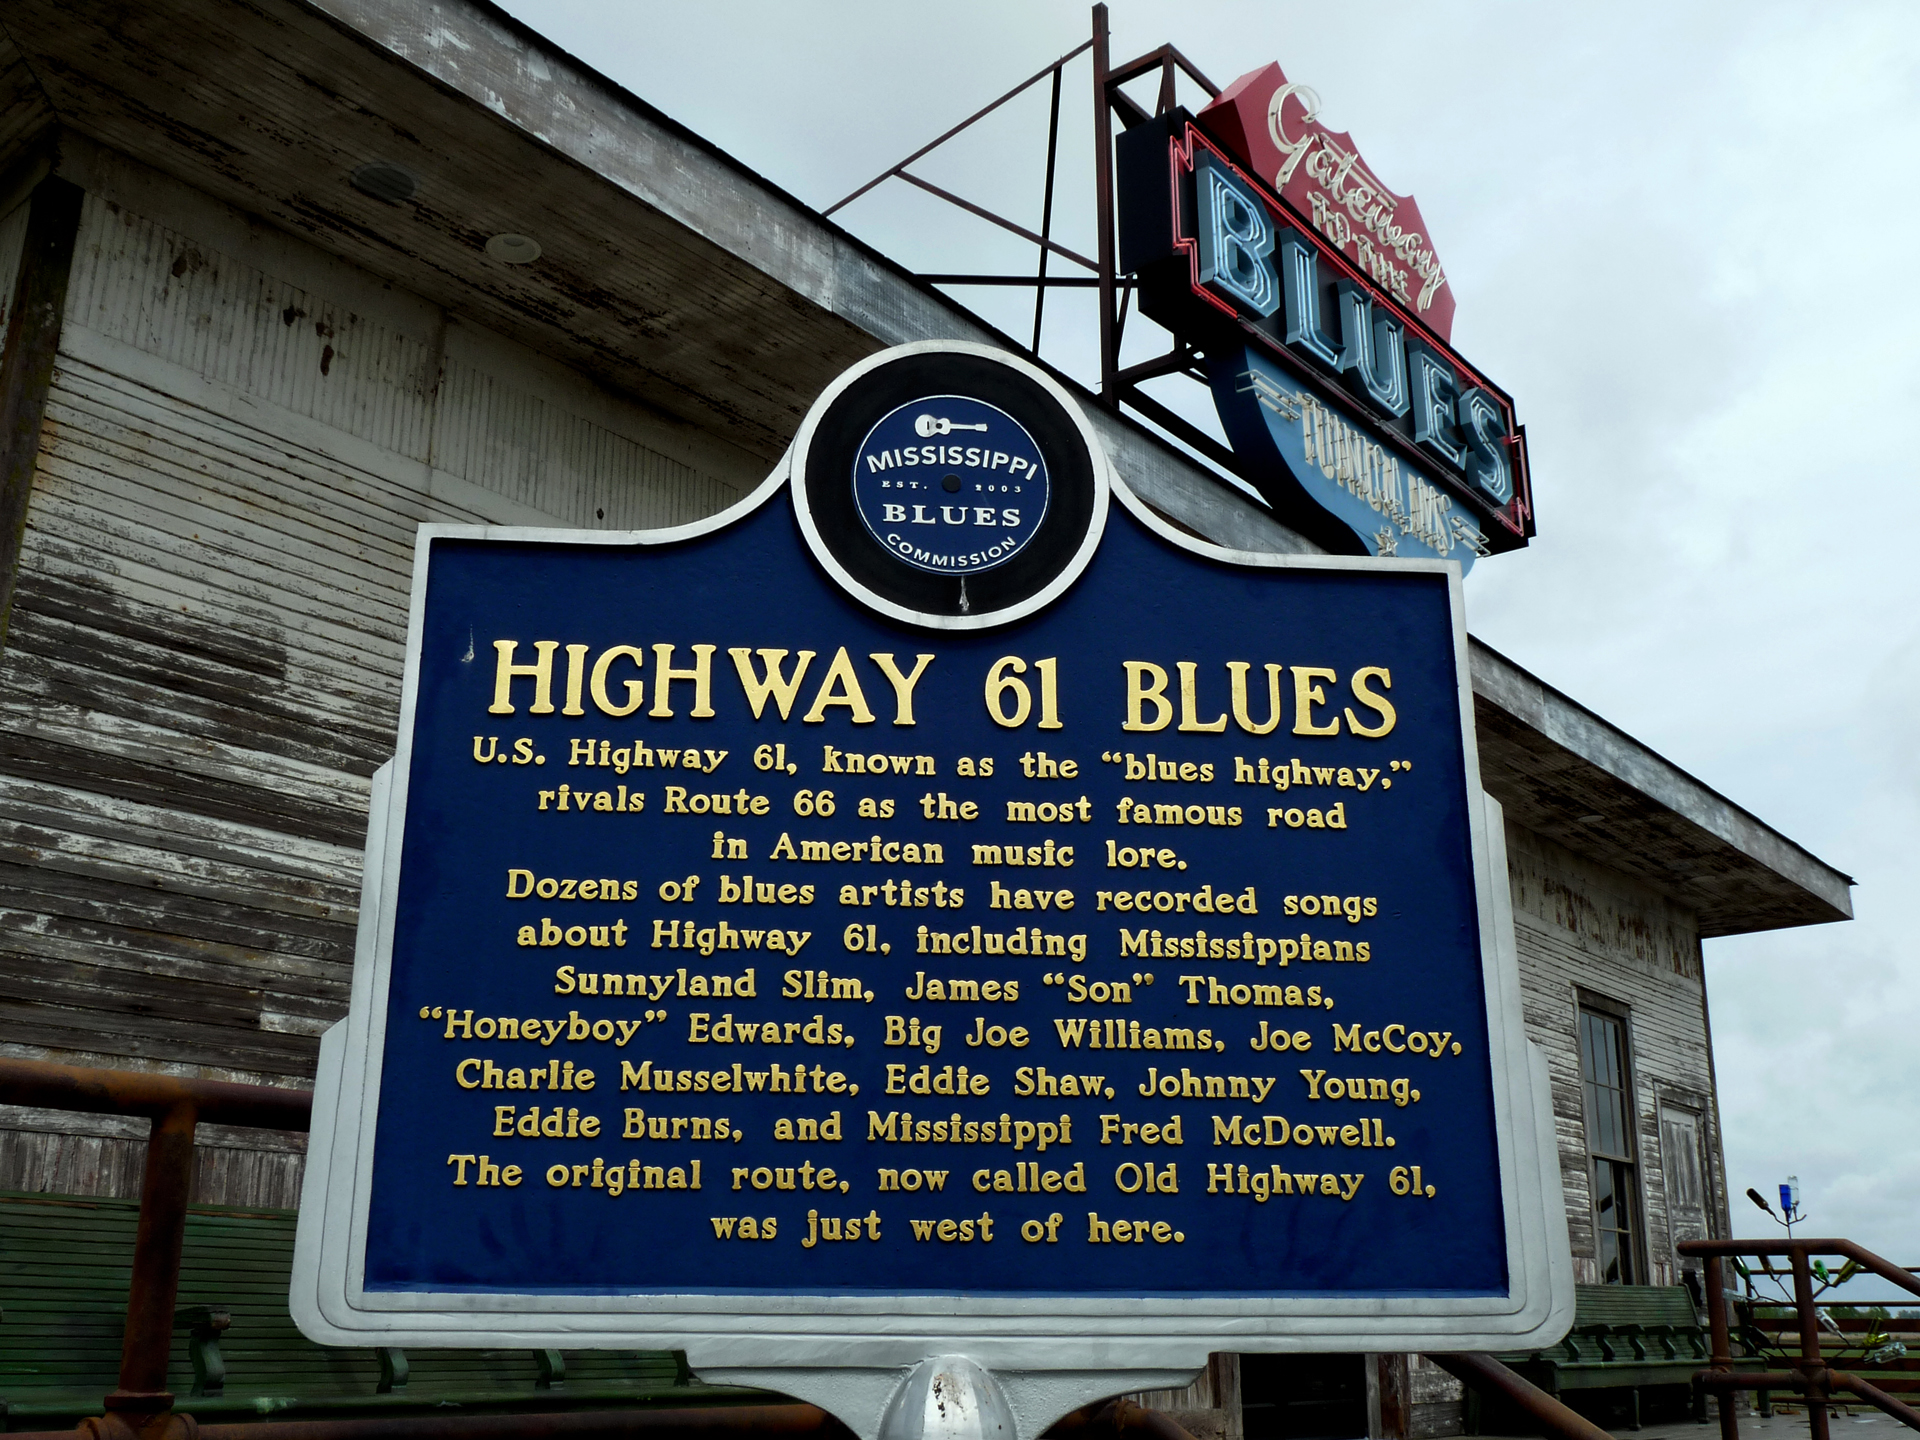 Mississippi Blues Trail marker for Highway 61